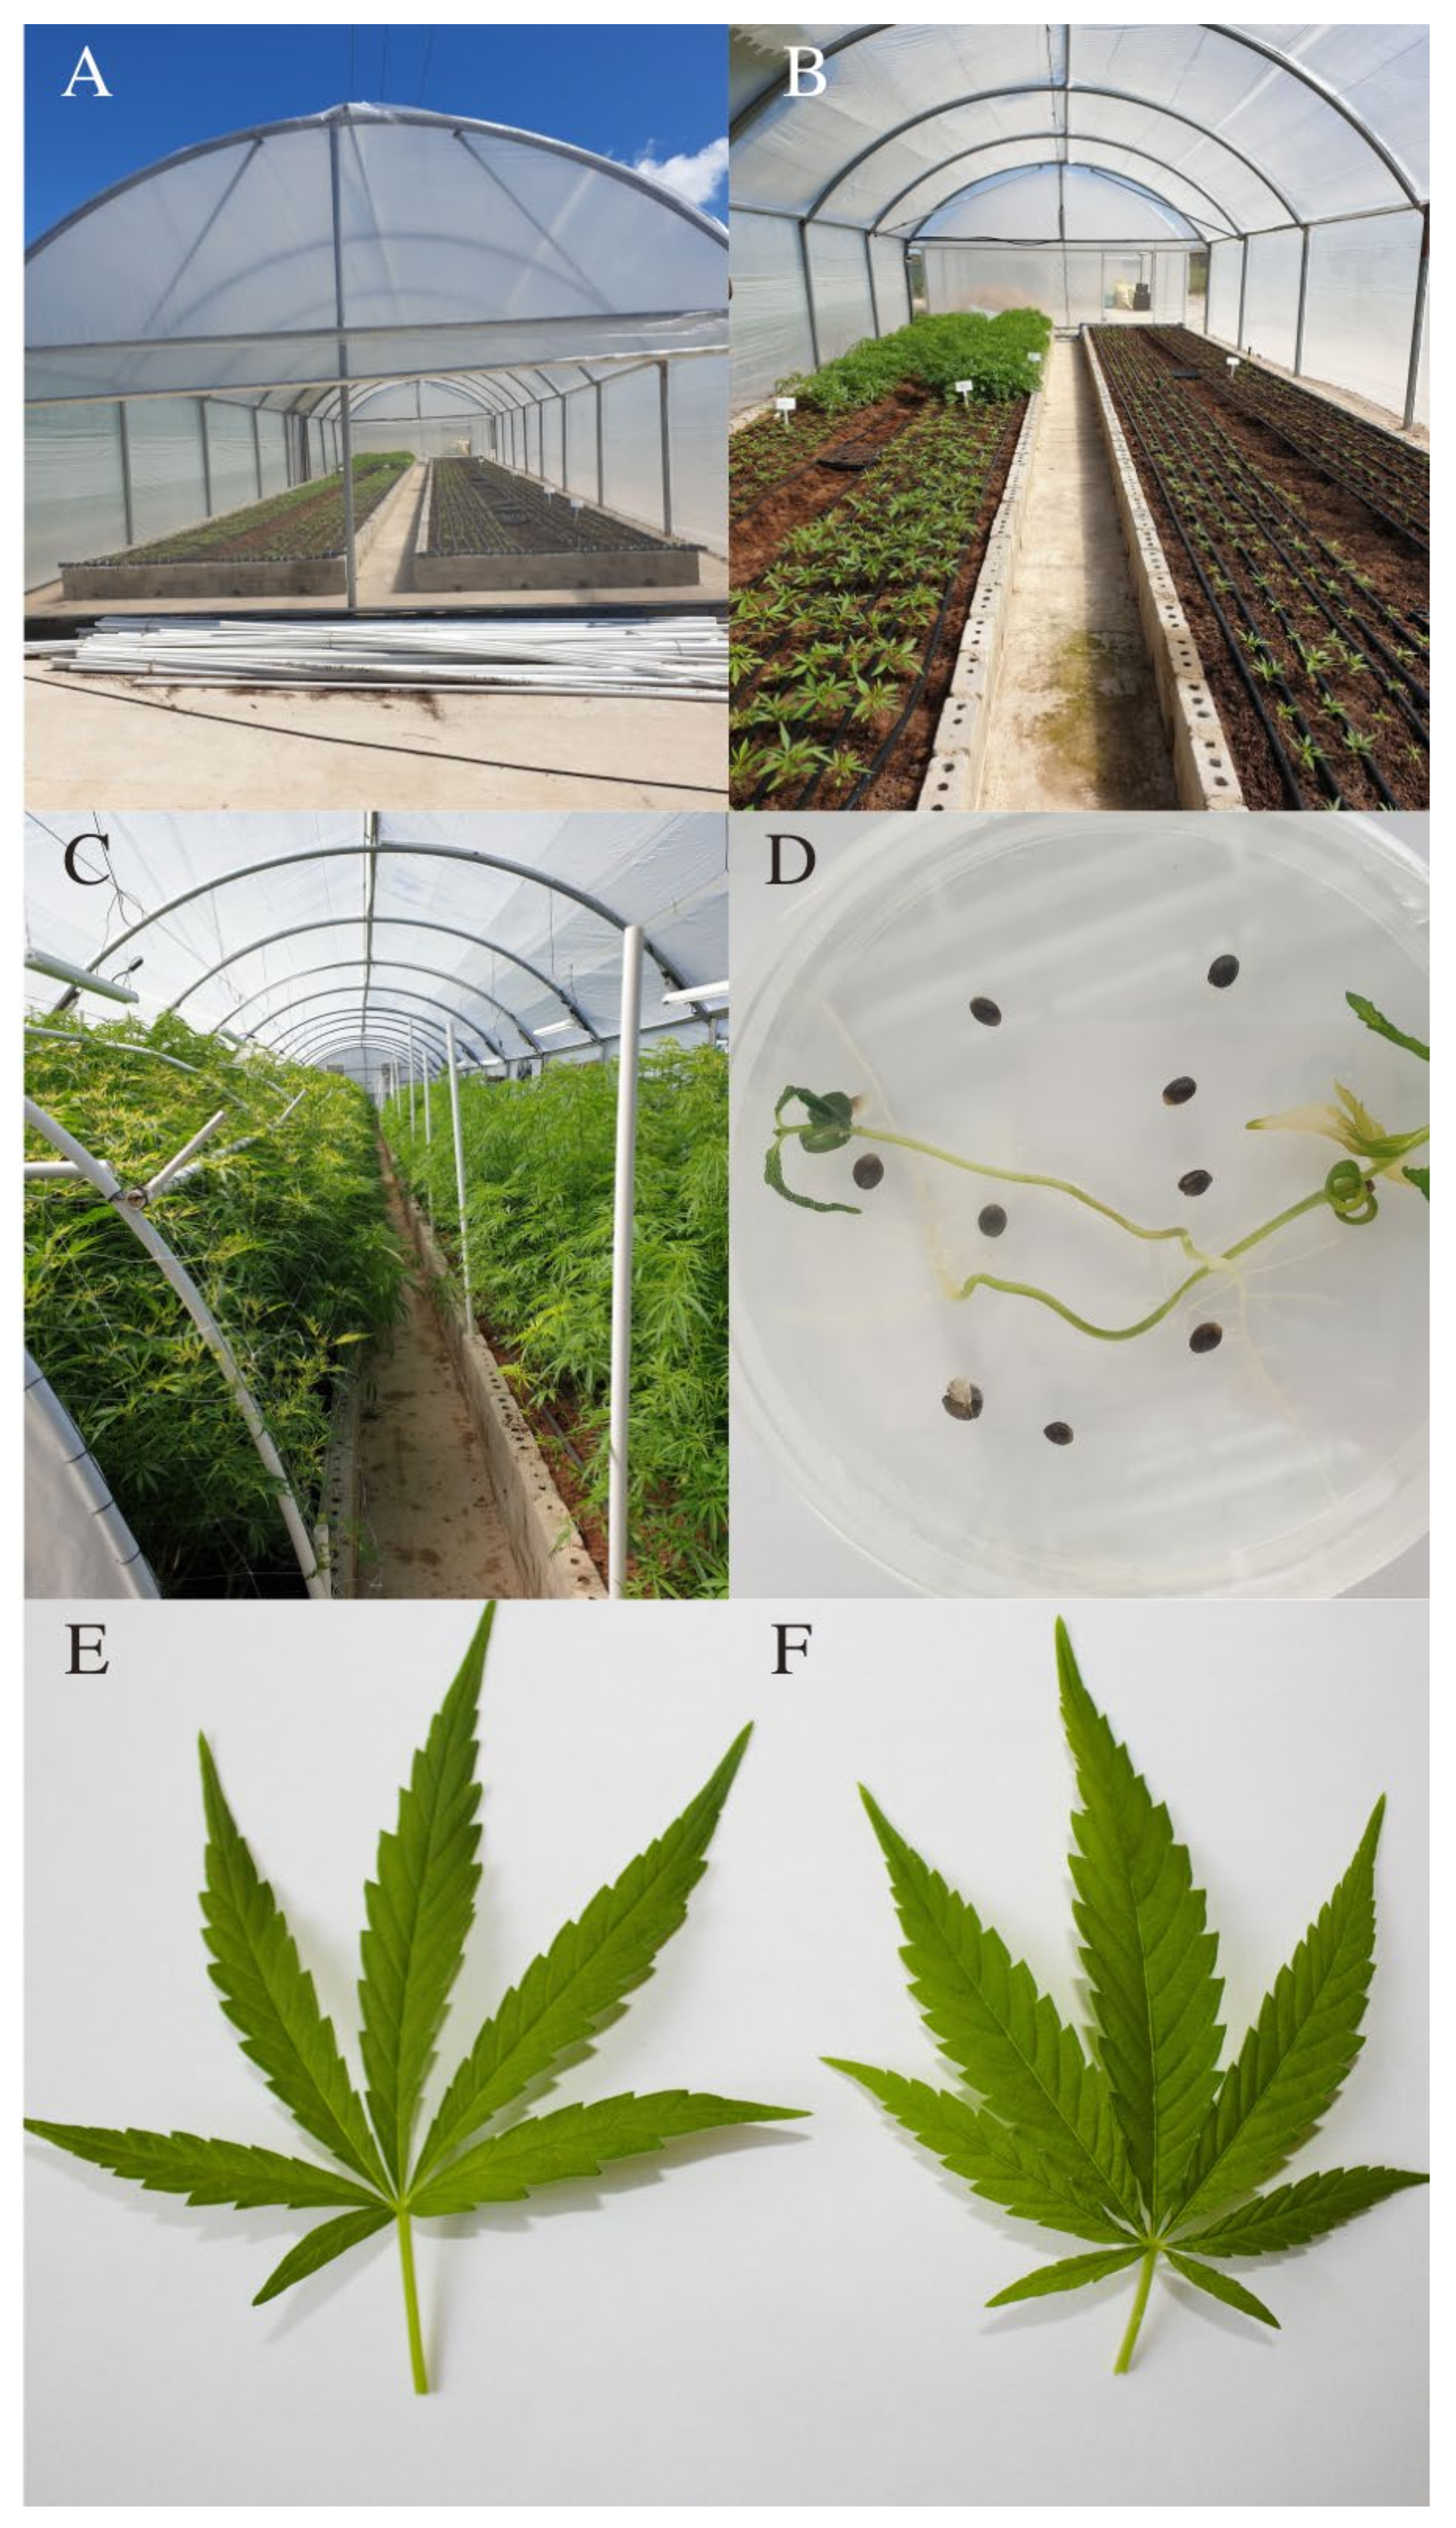 Botanists conduct first large-scale genetic study of marijuana, hemp